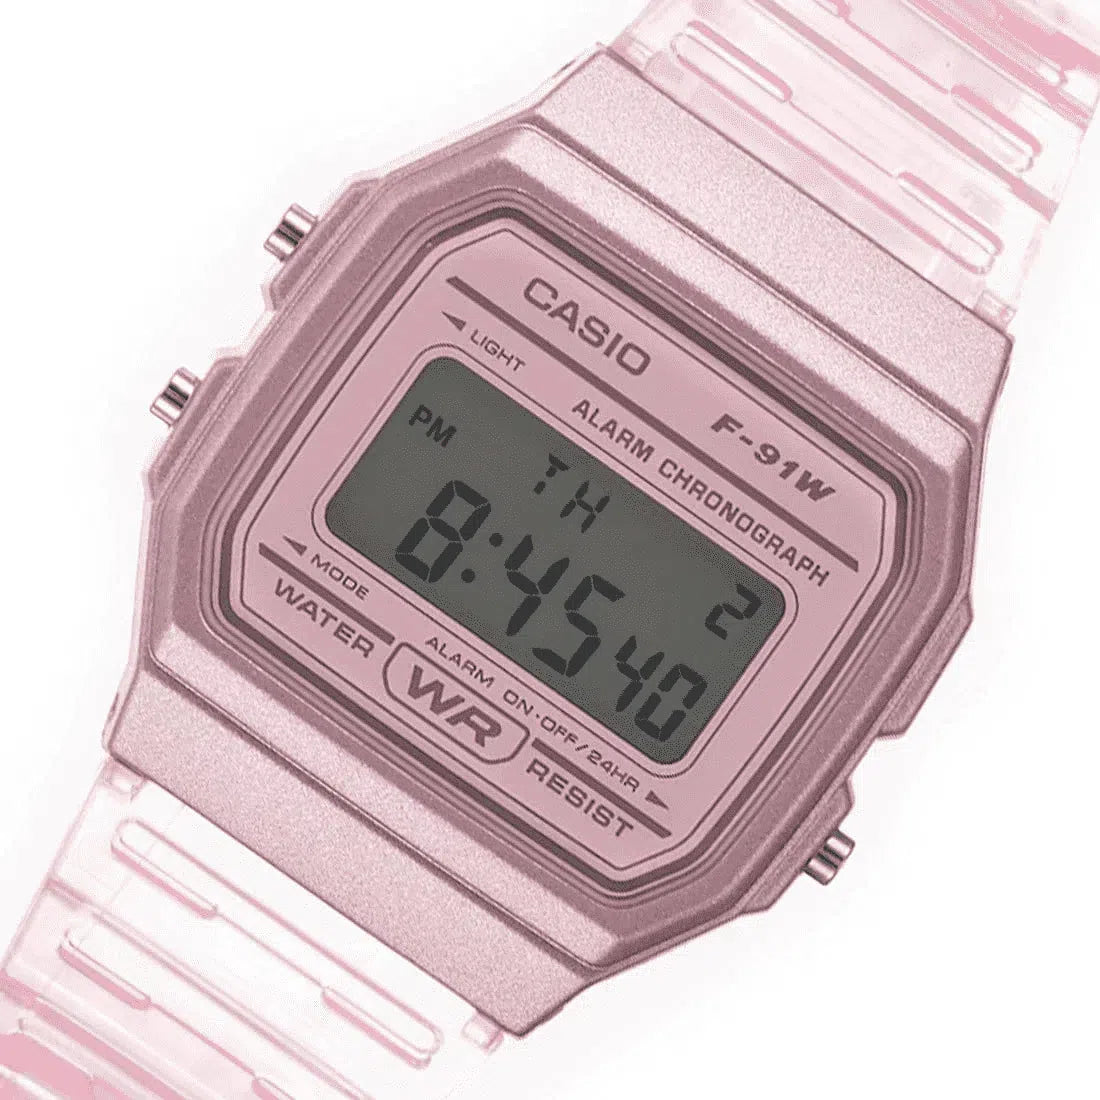 Casio F-91WS-4DF Pink Resin Transparent Strap Watch for Women-Watch Portal Philippines